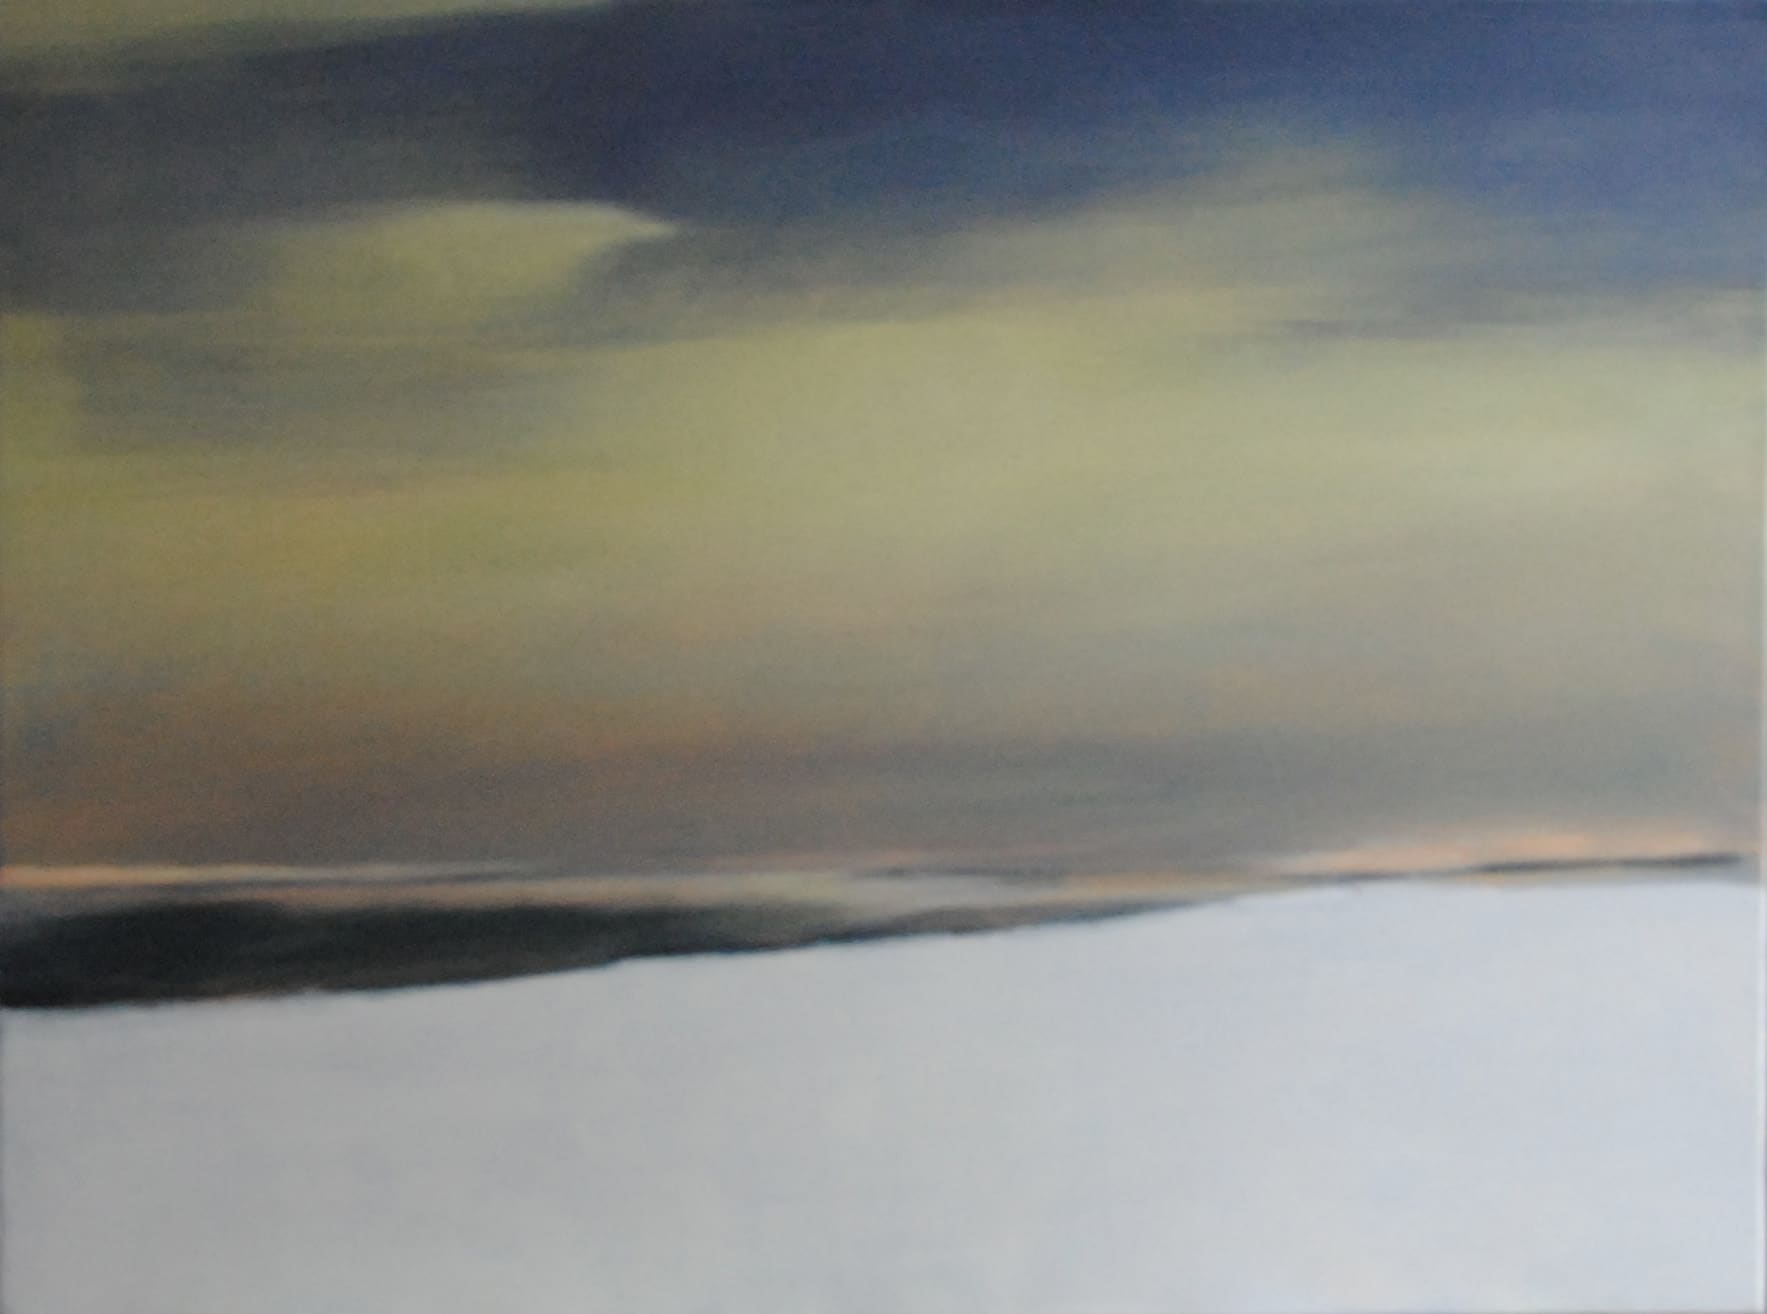 abstrakte Malerei kaufen: Landschaft, Nordsee, Meer, Himmel